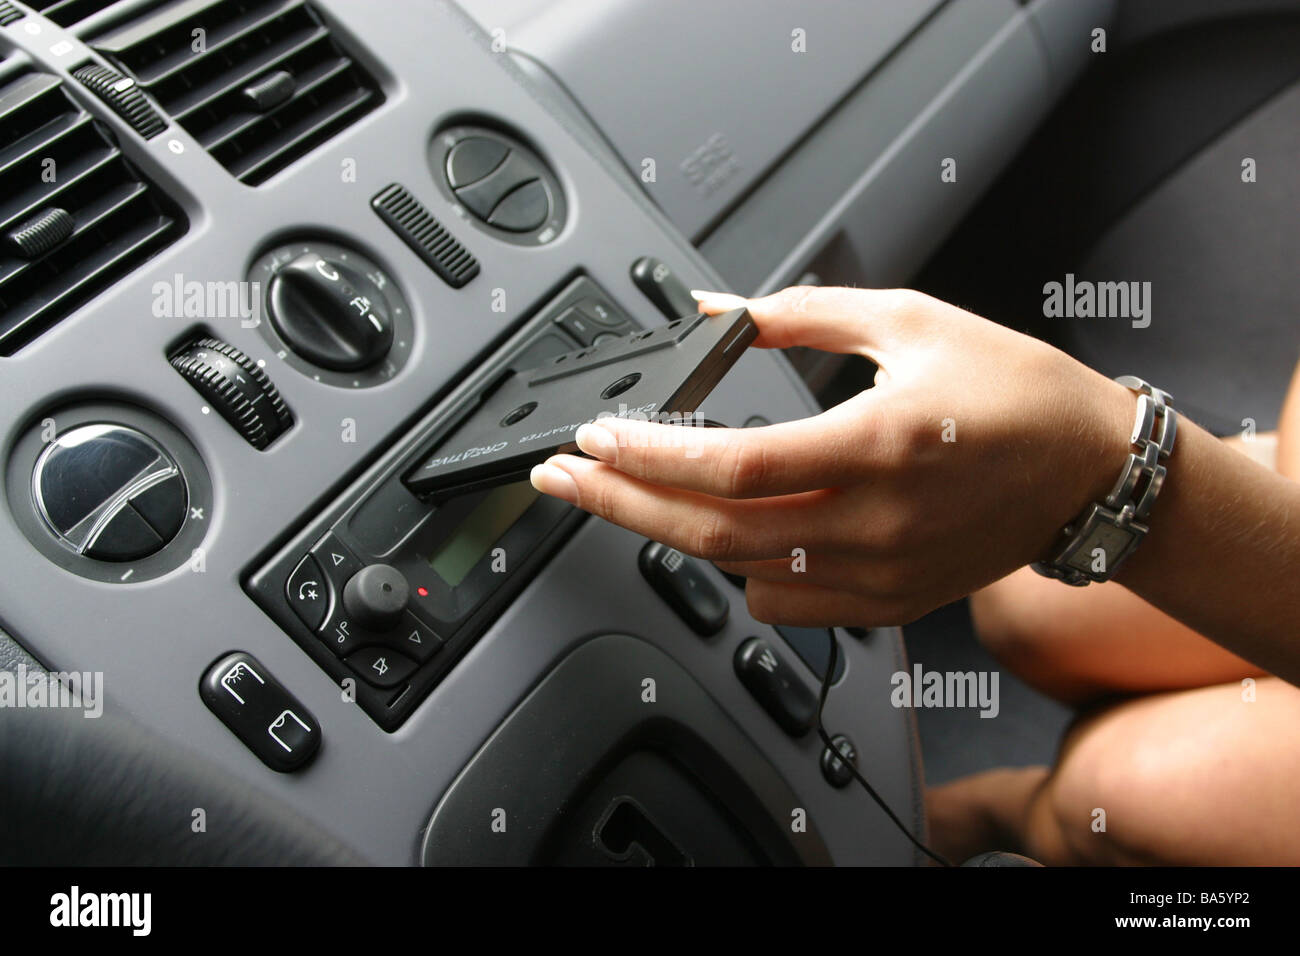 https://c8.alamy.com/comp/BA5YP2/car-indoors-woman-hand-adapter-cassette-car-radio-cassette-shaft-puts-BA5YP2.jpg